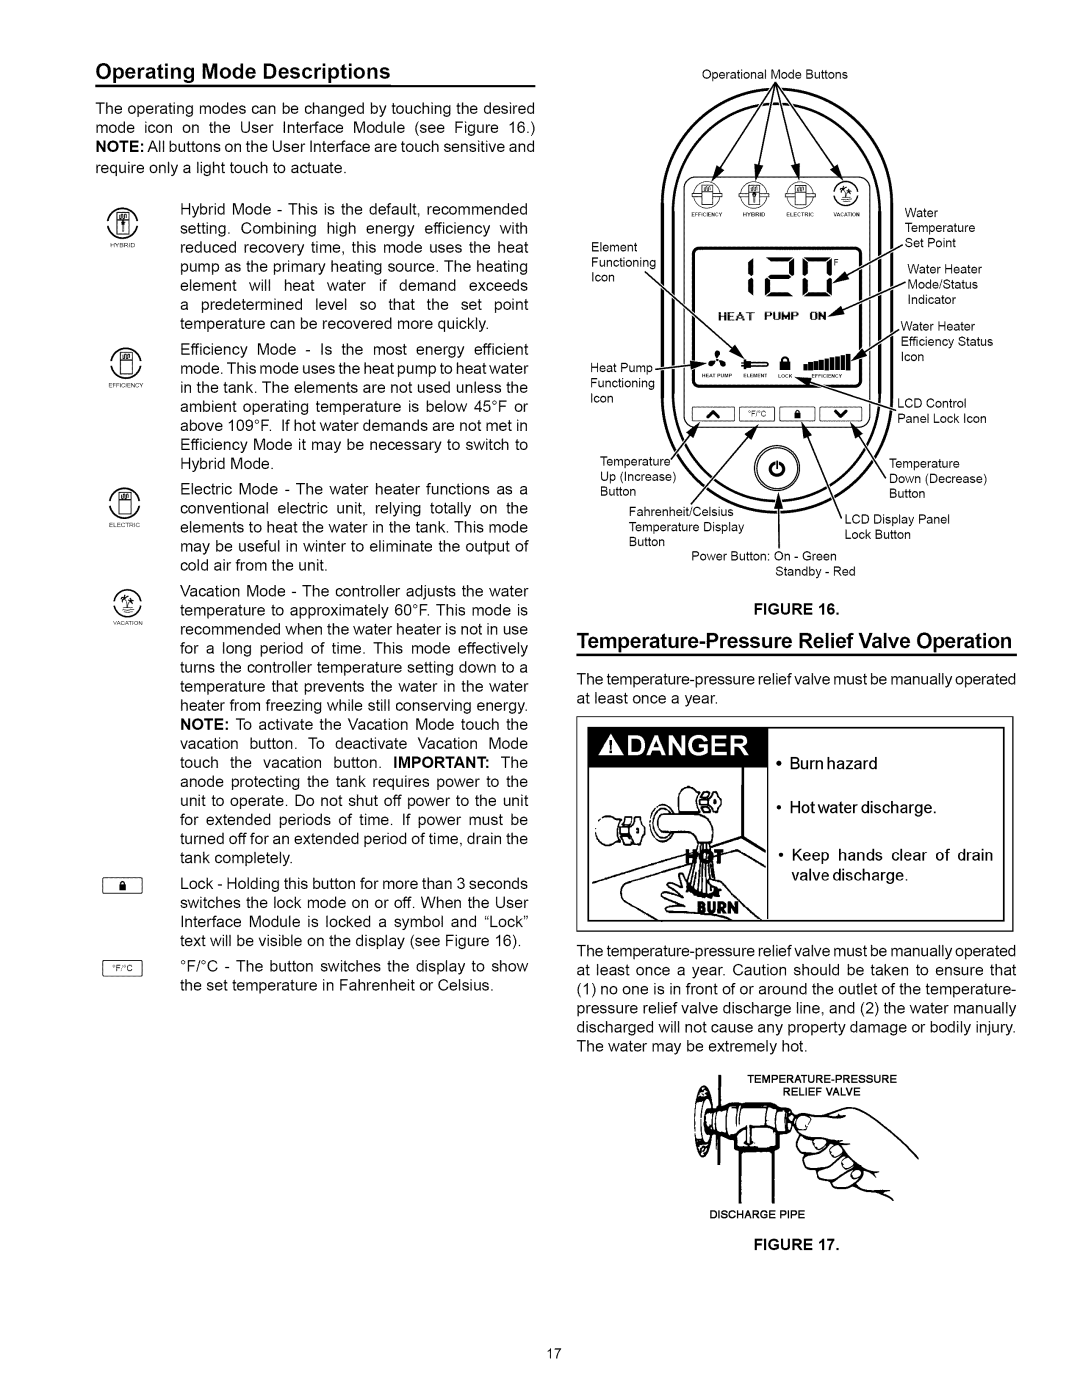 Kenmore 153.32116, 153.32118 manual Operating Mode Descriptions, Temperature-Pressure Relief Valve Operation 